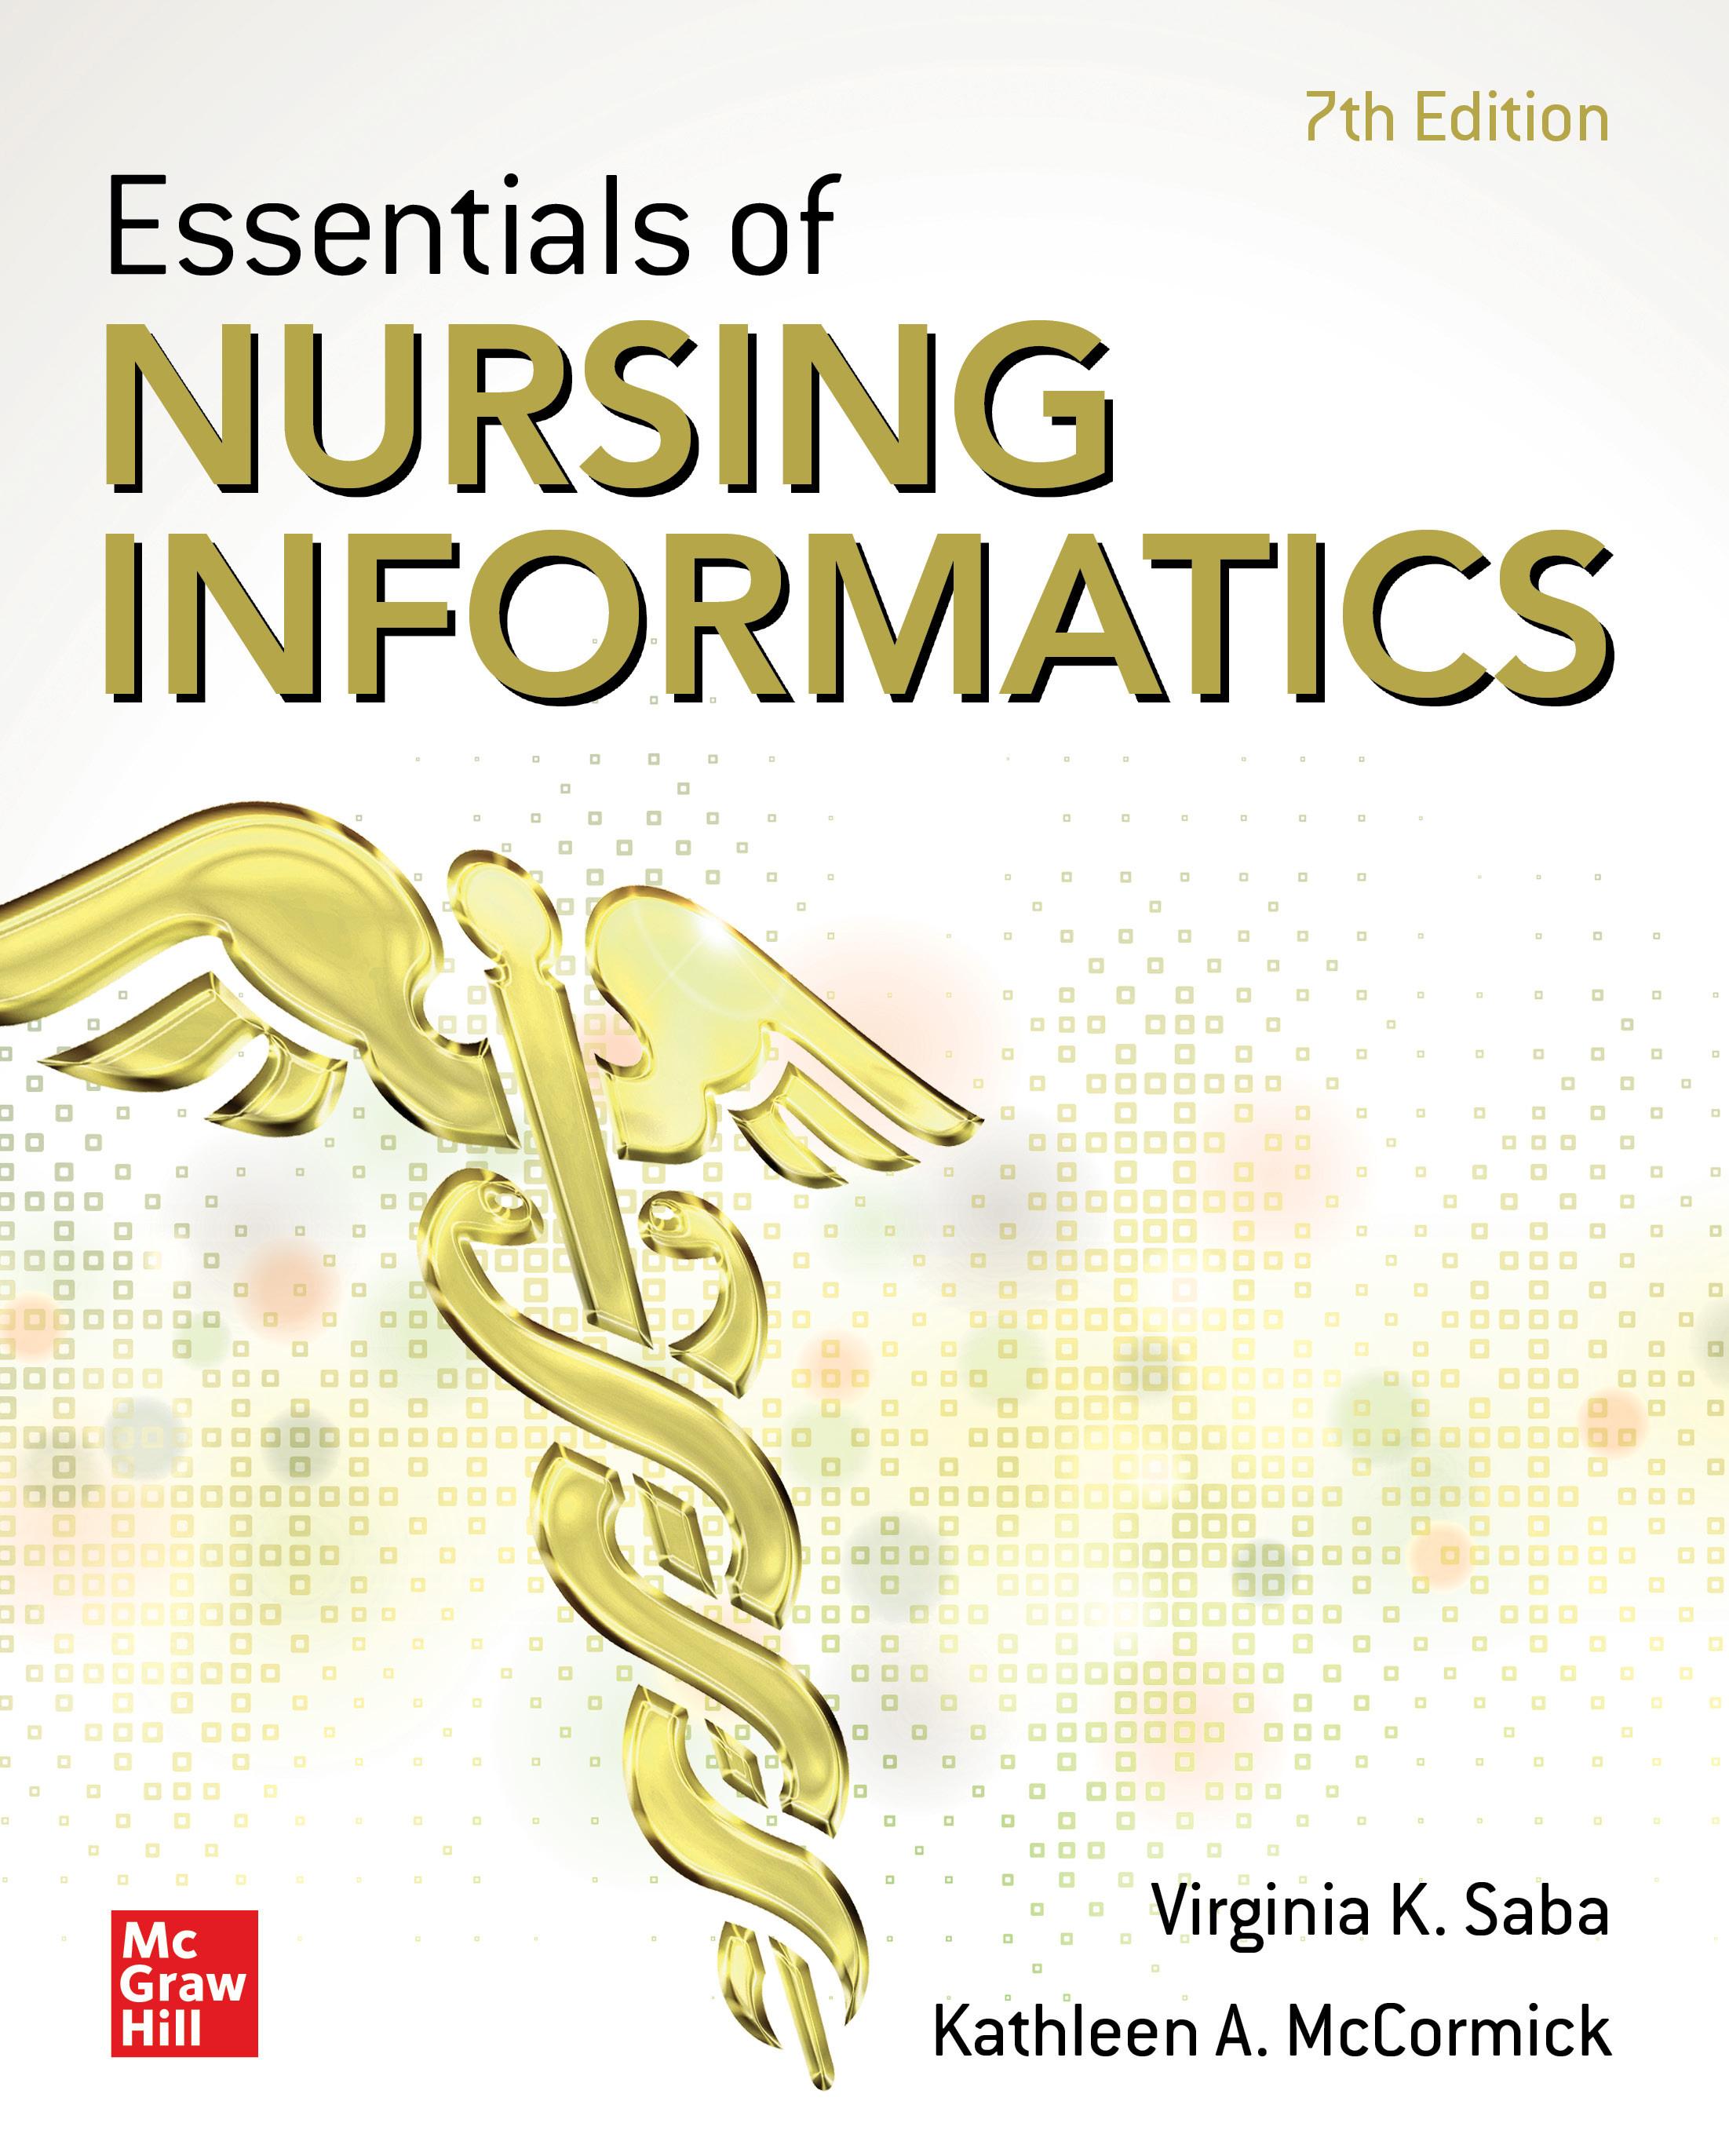 Essentials Of Nursing Informatics, 7th Edition